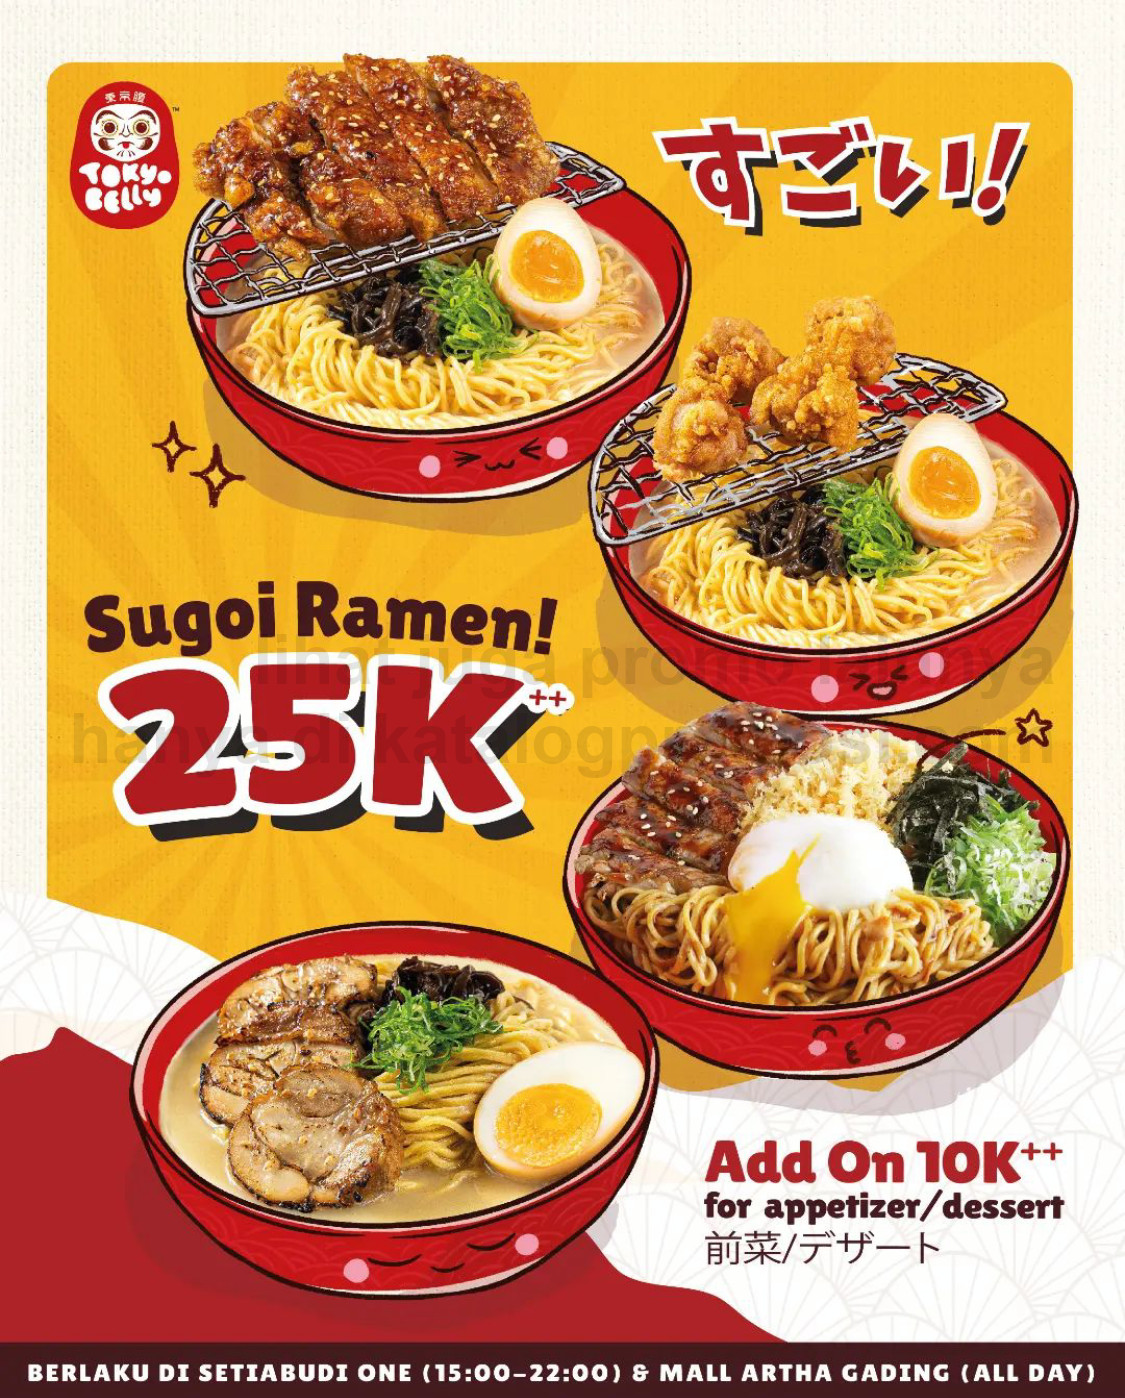 Promo TOKYO BELLY SUGOI RAMEN MULAI Rp. 25.000++